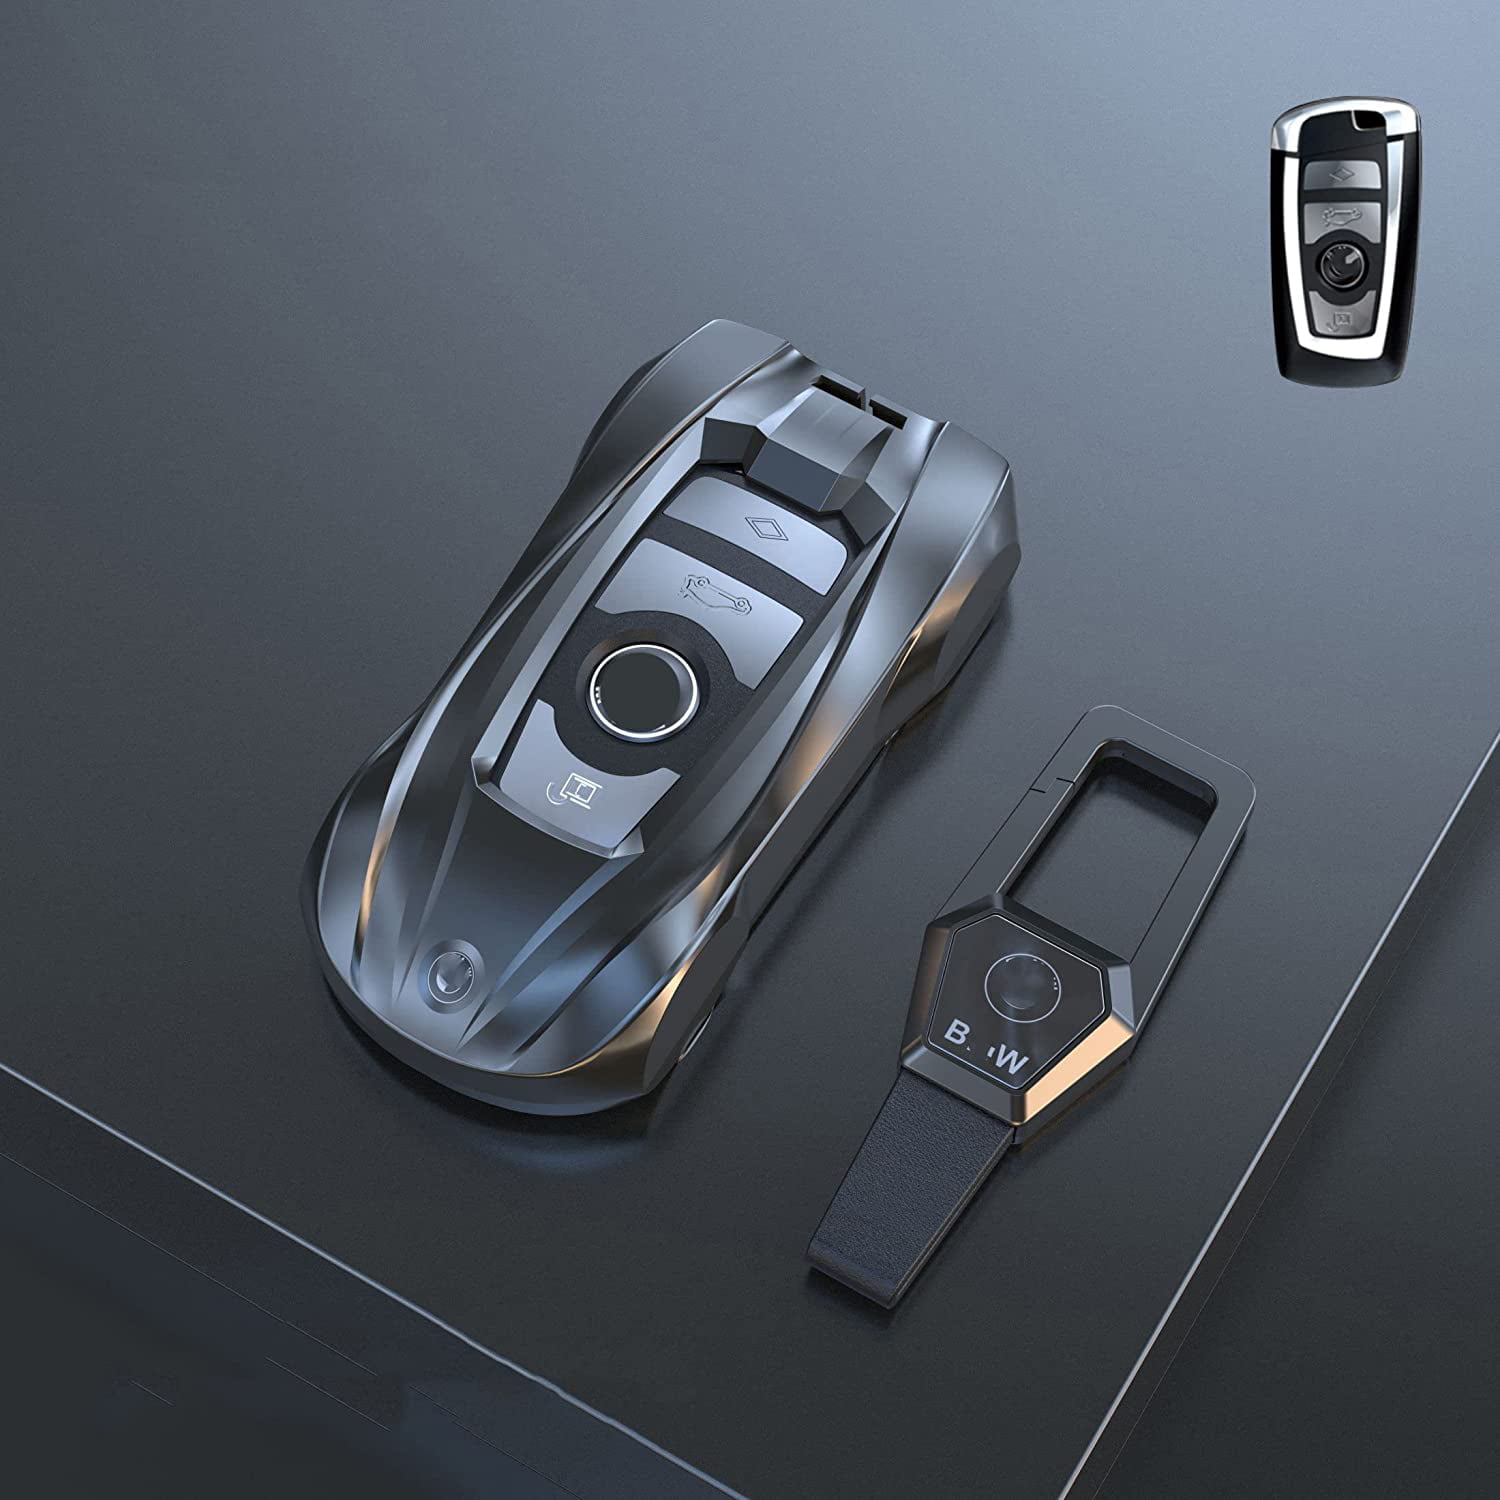 Mercedes Benz Key Fob Cover (5 Types)